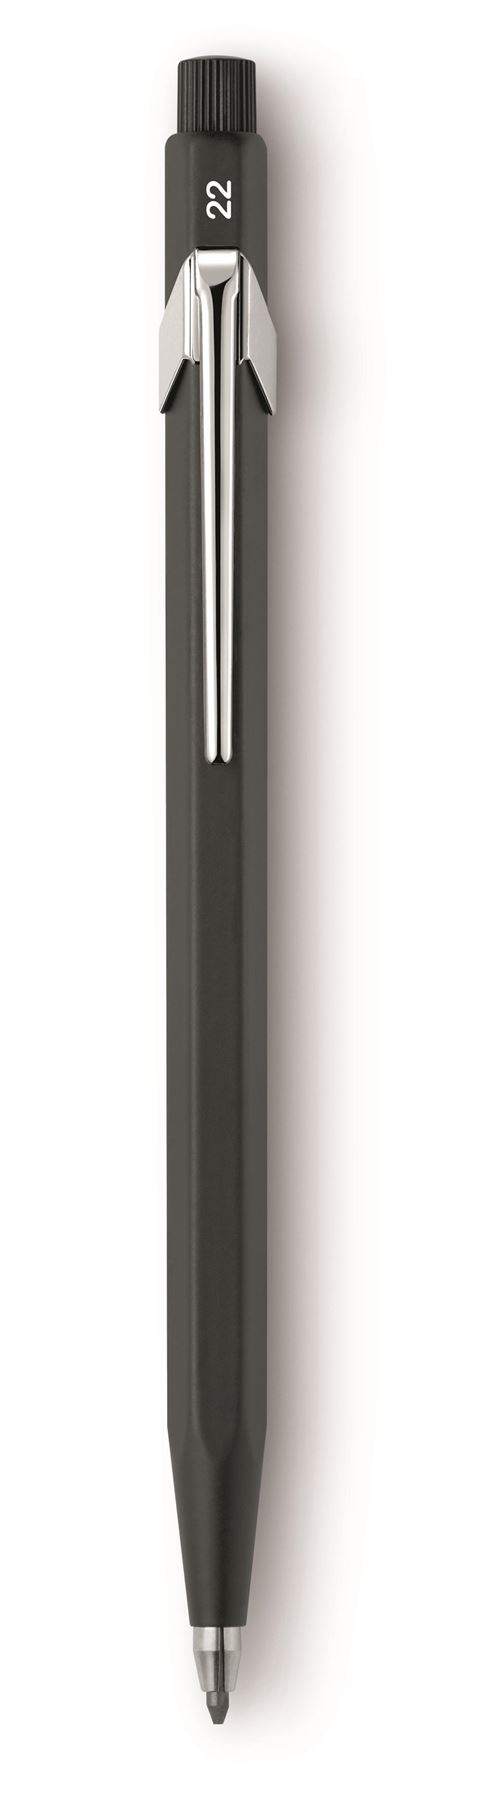 Crayon à papier Caran d’Ache Fixpencil boutons assortis 2 mm Noir